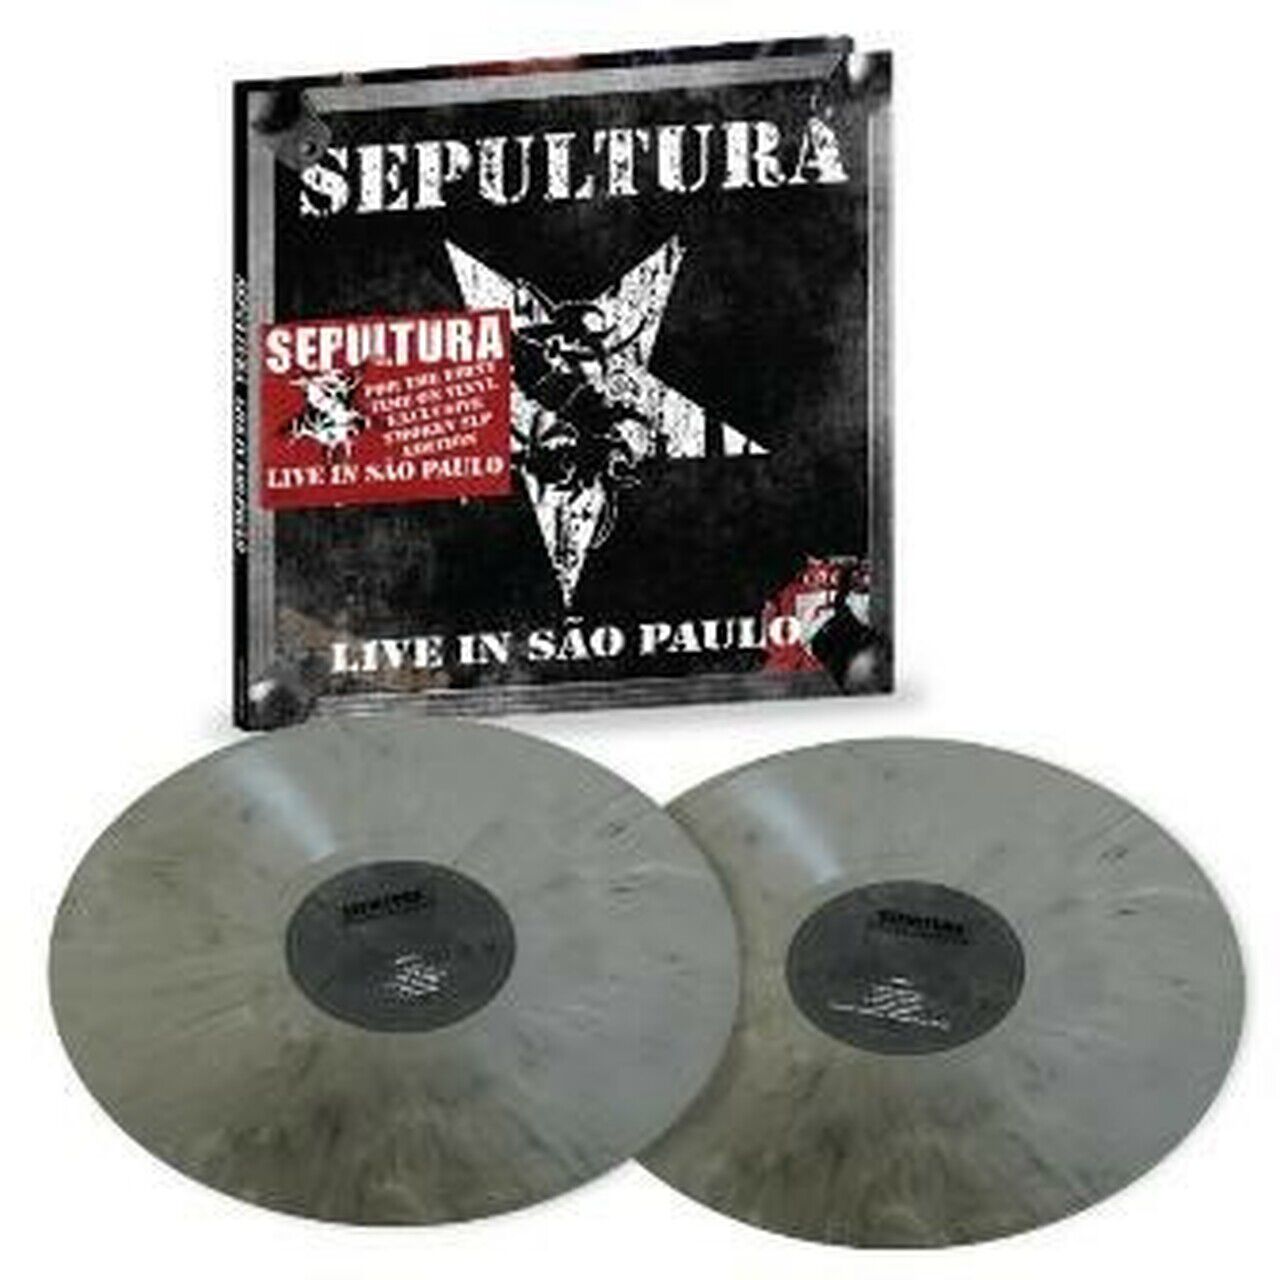 Sepultura Live in Sao Paulo LP farbig